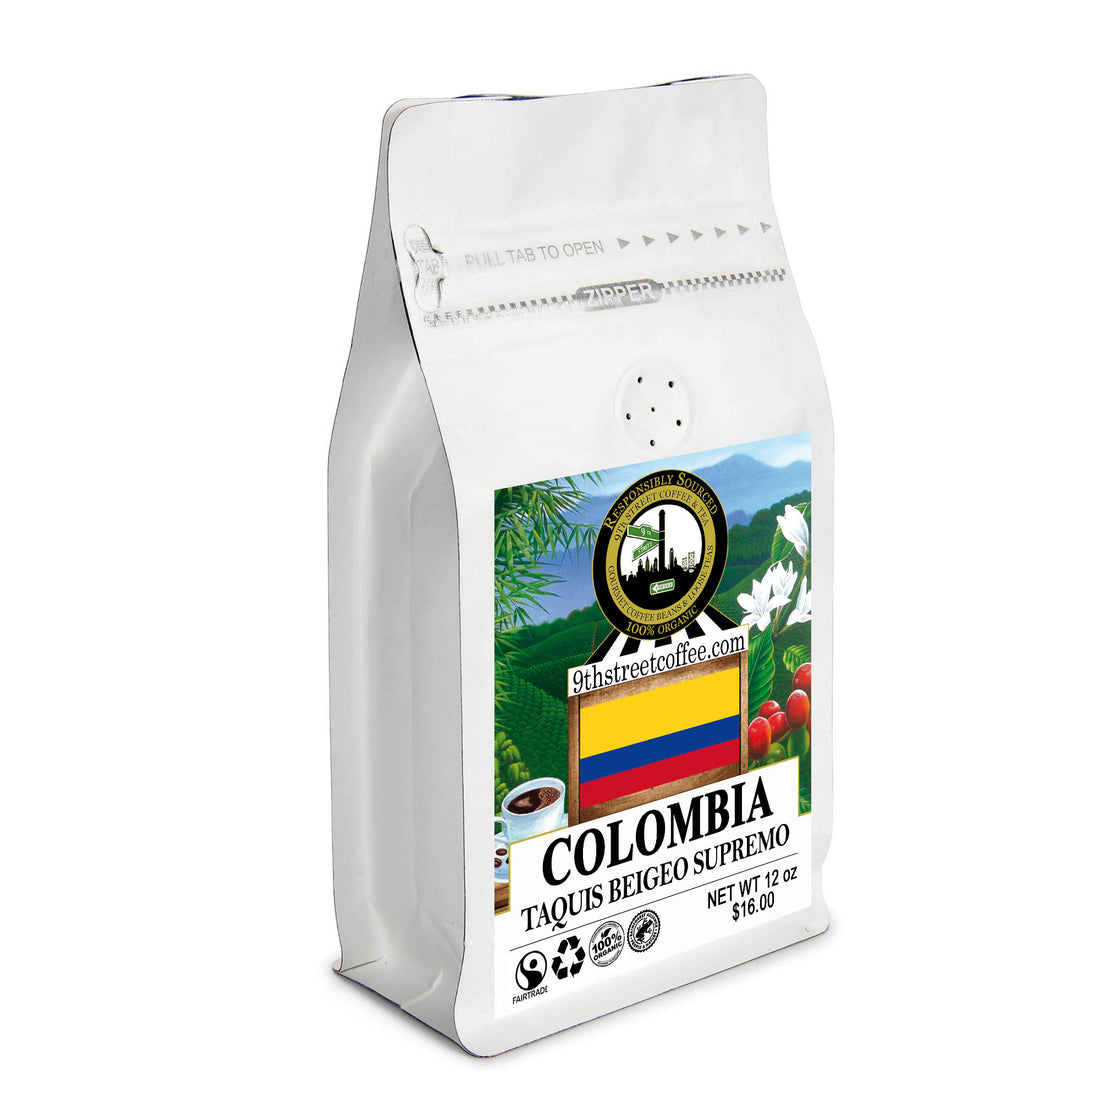 Organic Colombian Taquis Beigeo Supremo Coffee